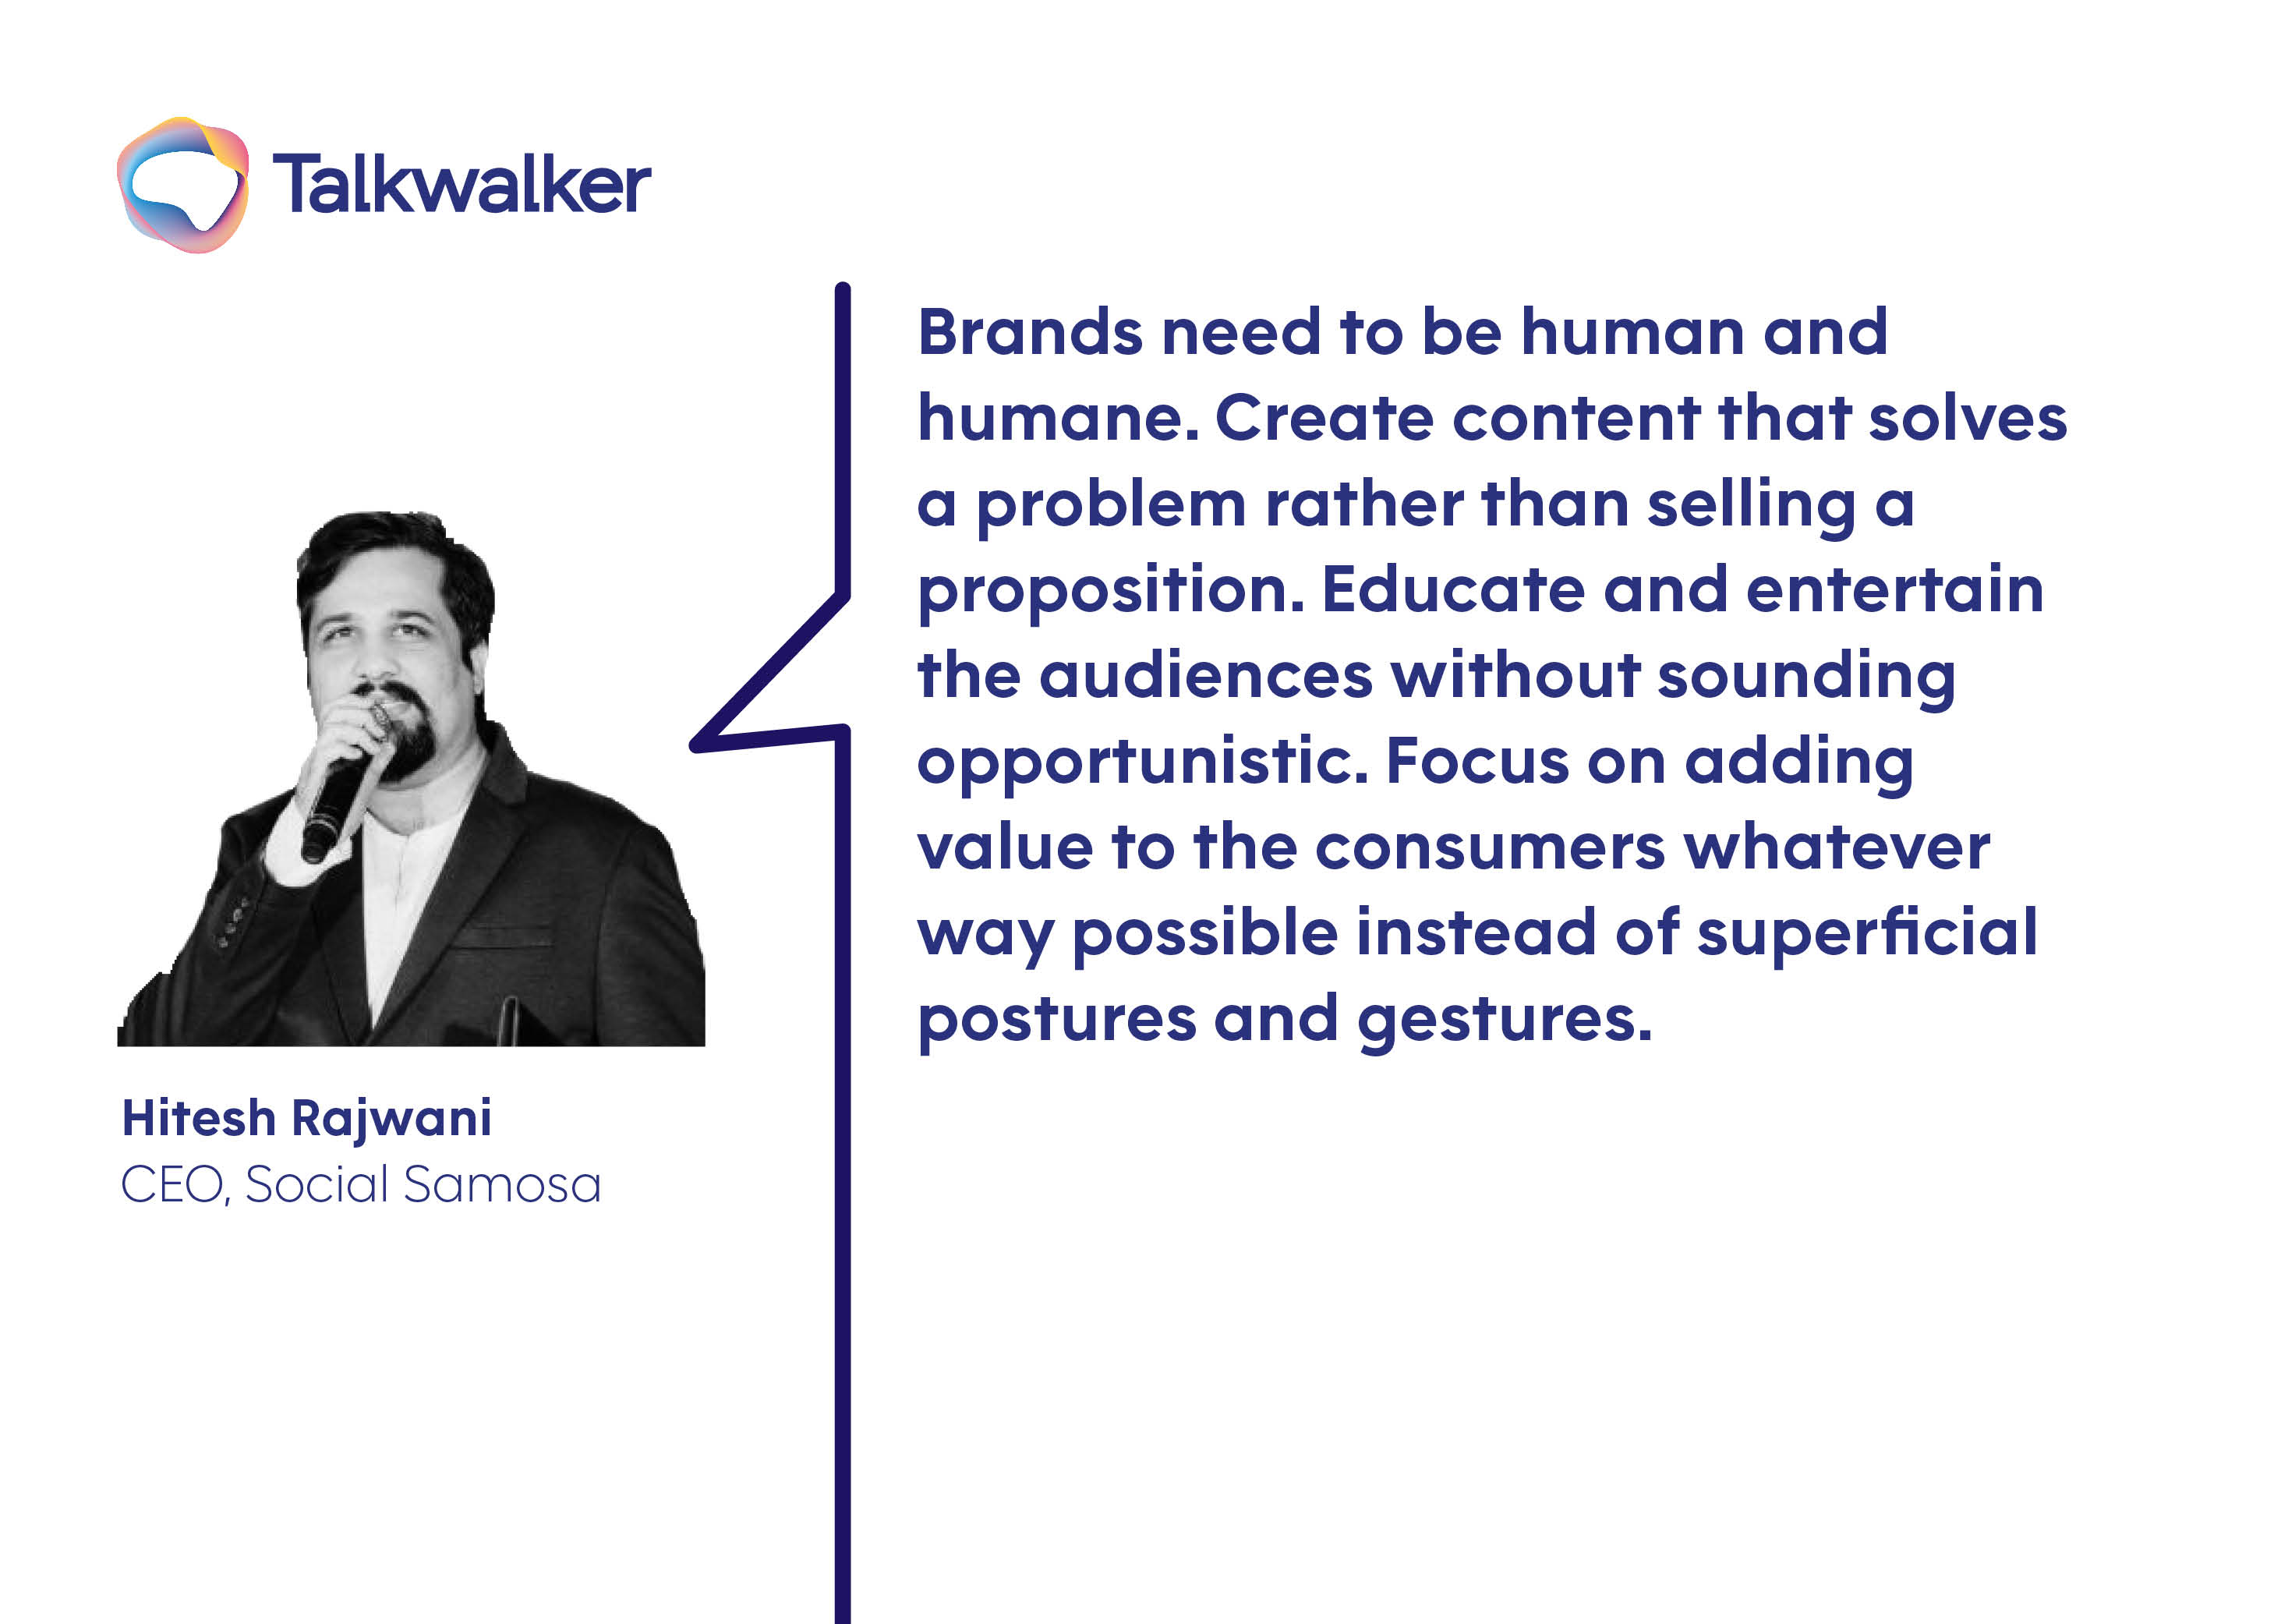 Hitesh Rajwani - CEO, Social Samosa gives marketing advice during corona